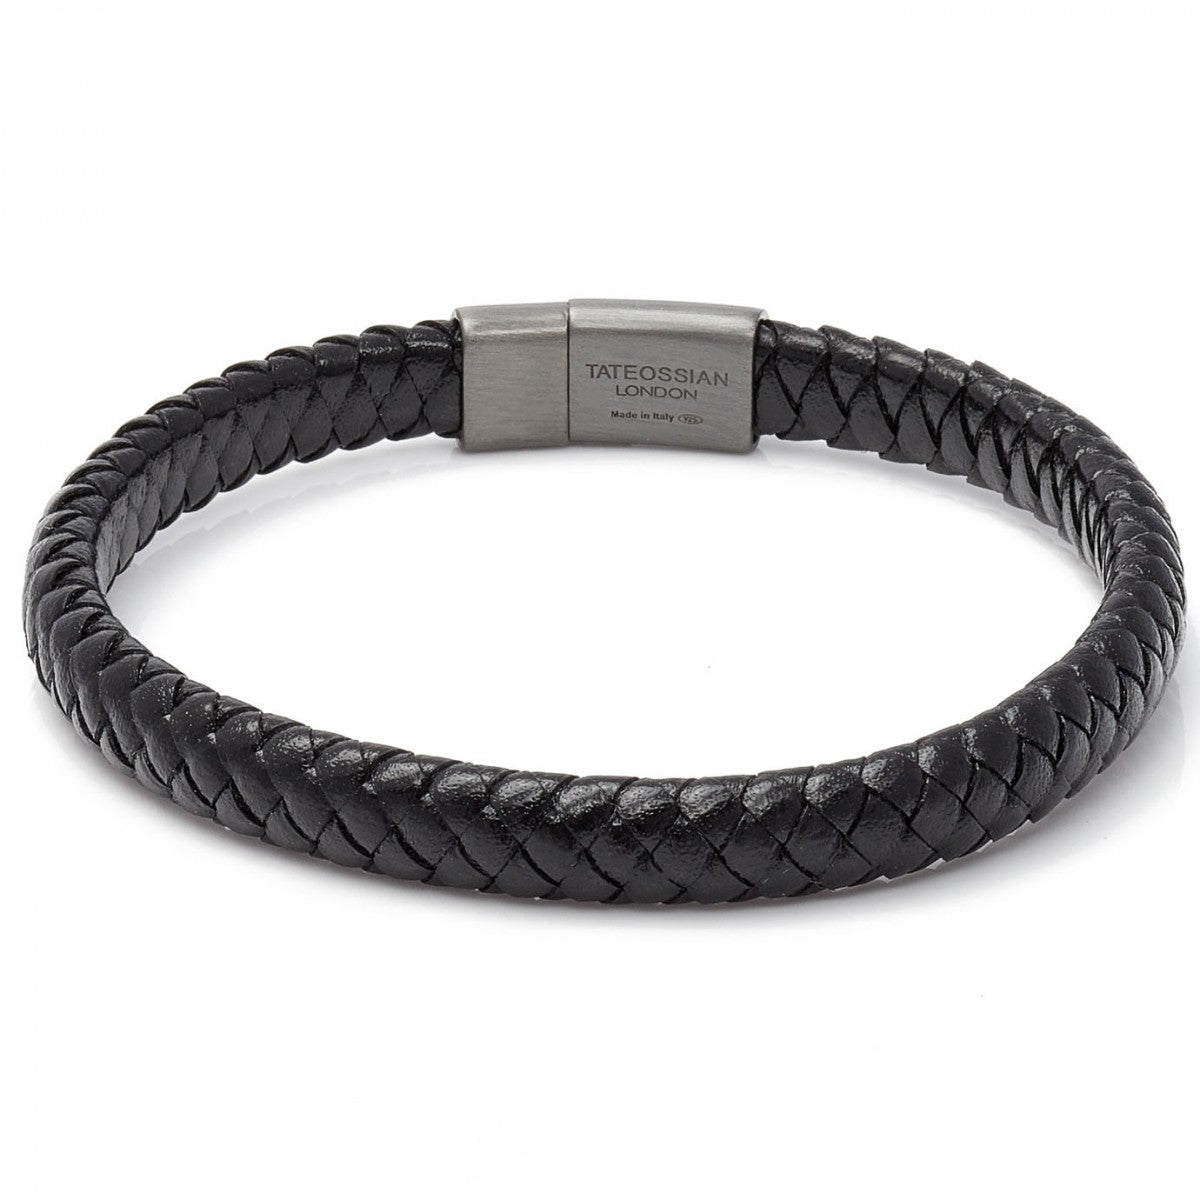 Tateossian Men's Cobra Sontuoso Wide Leather Bracelet, Black